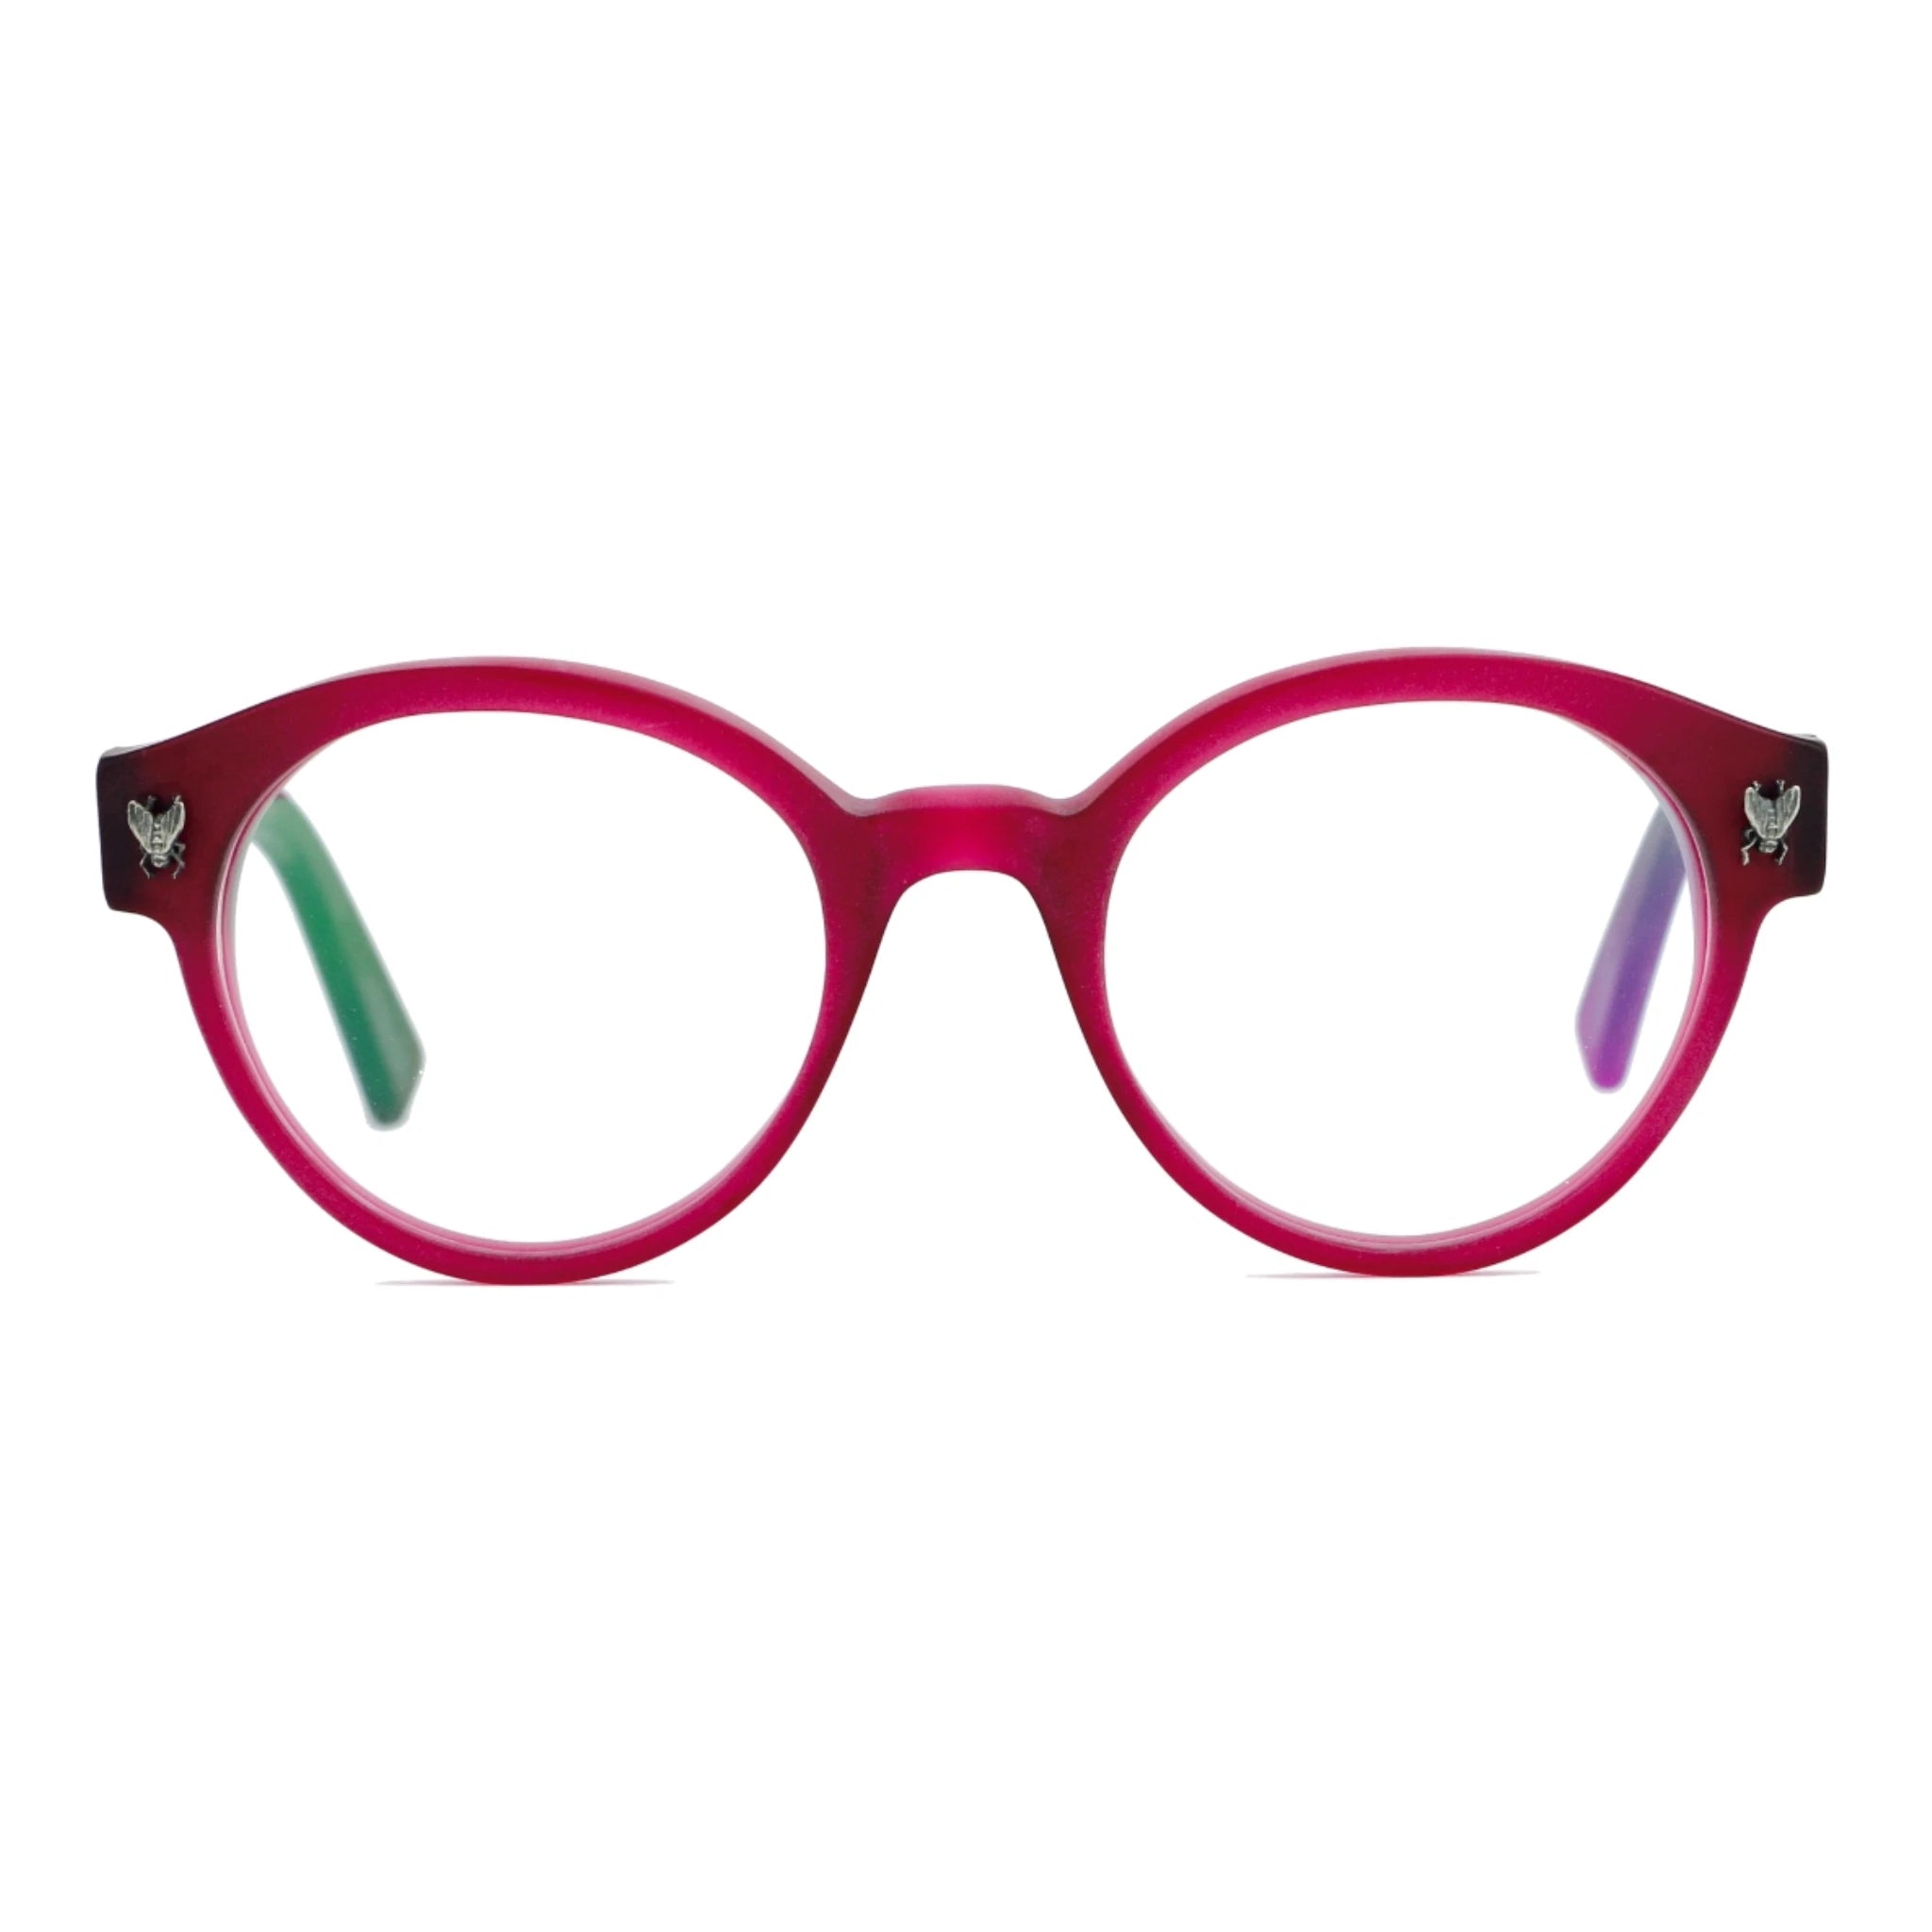 Red round luxury prescription eyeglasses